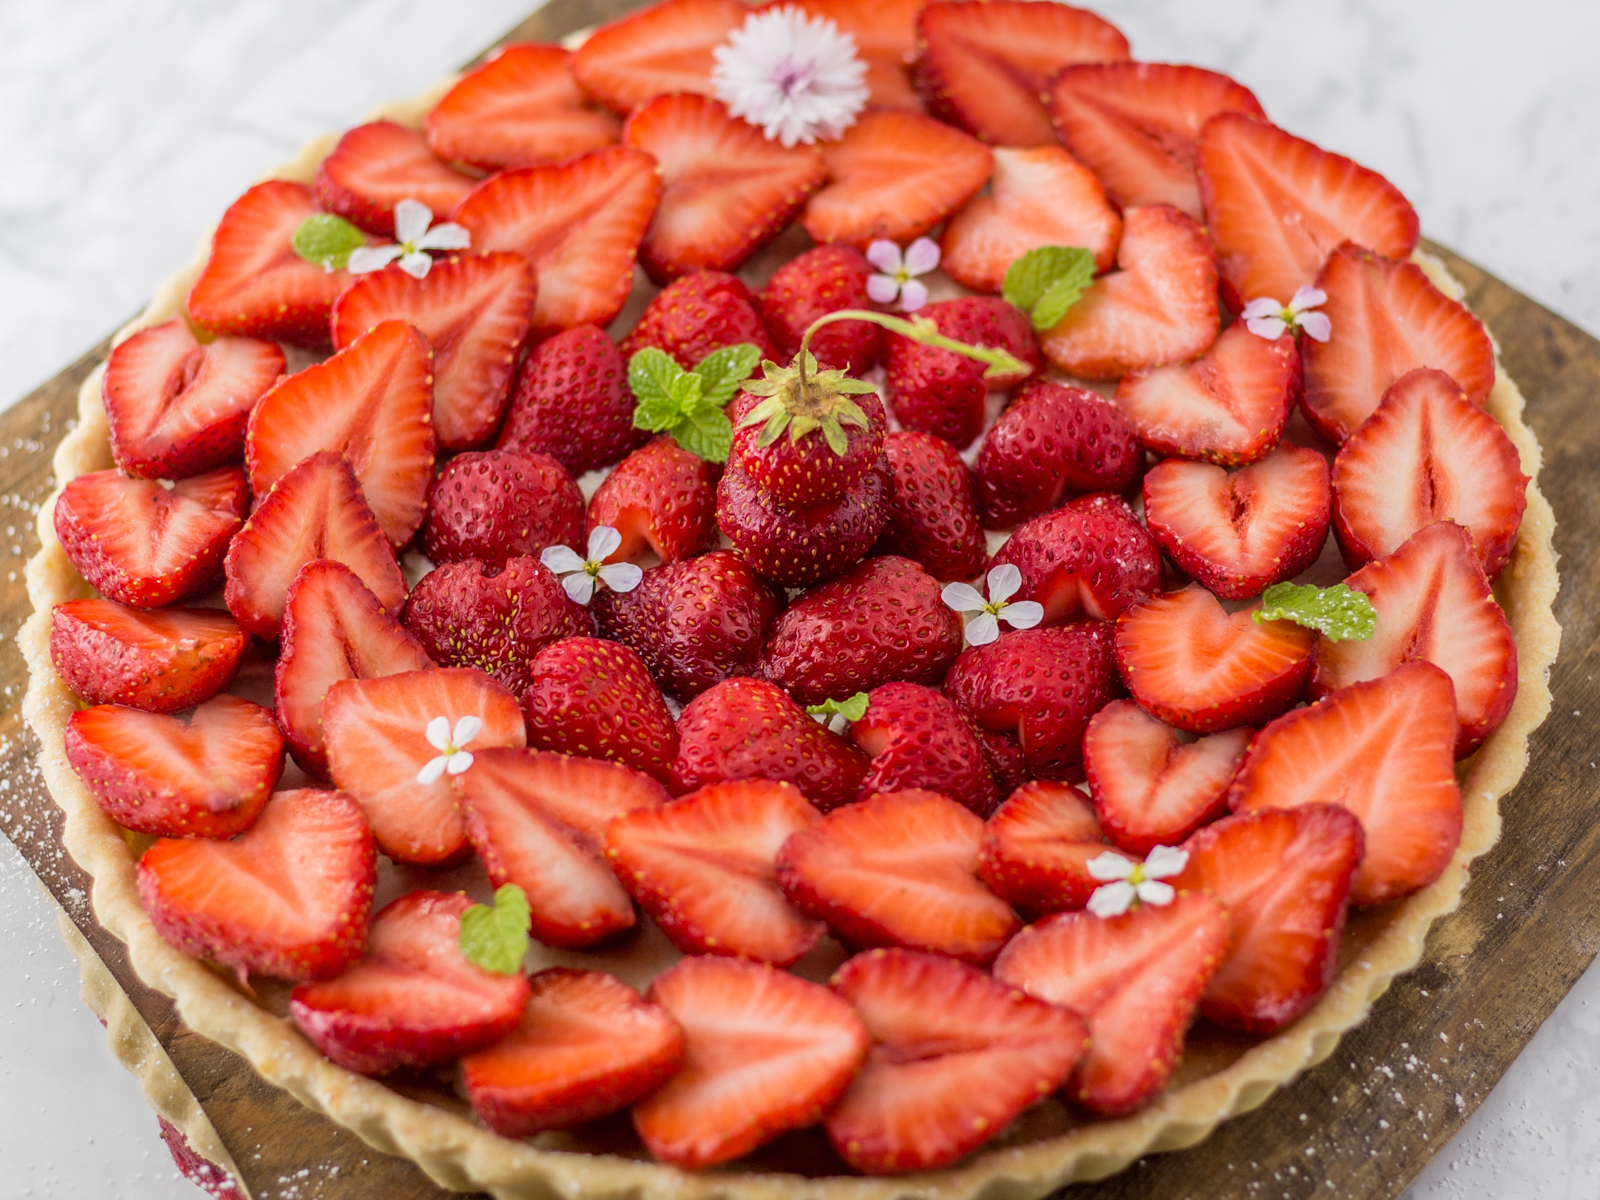 French Strawberry Tart (Tarte aux Fraises) - Pardon Your French